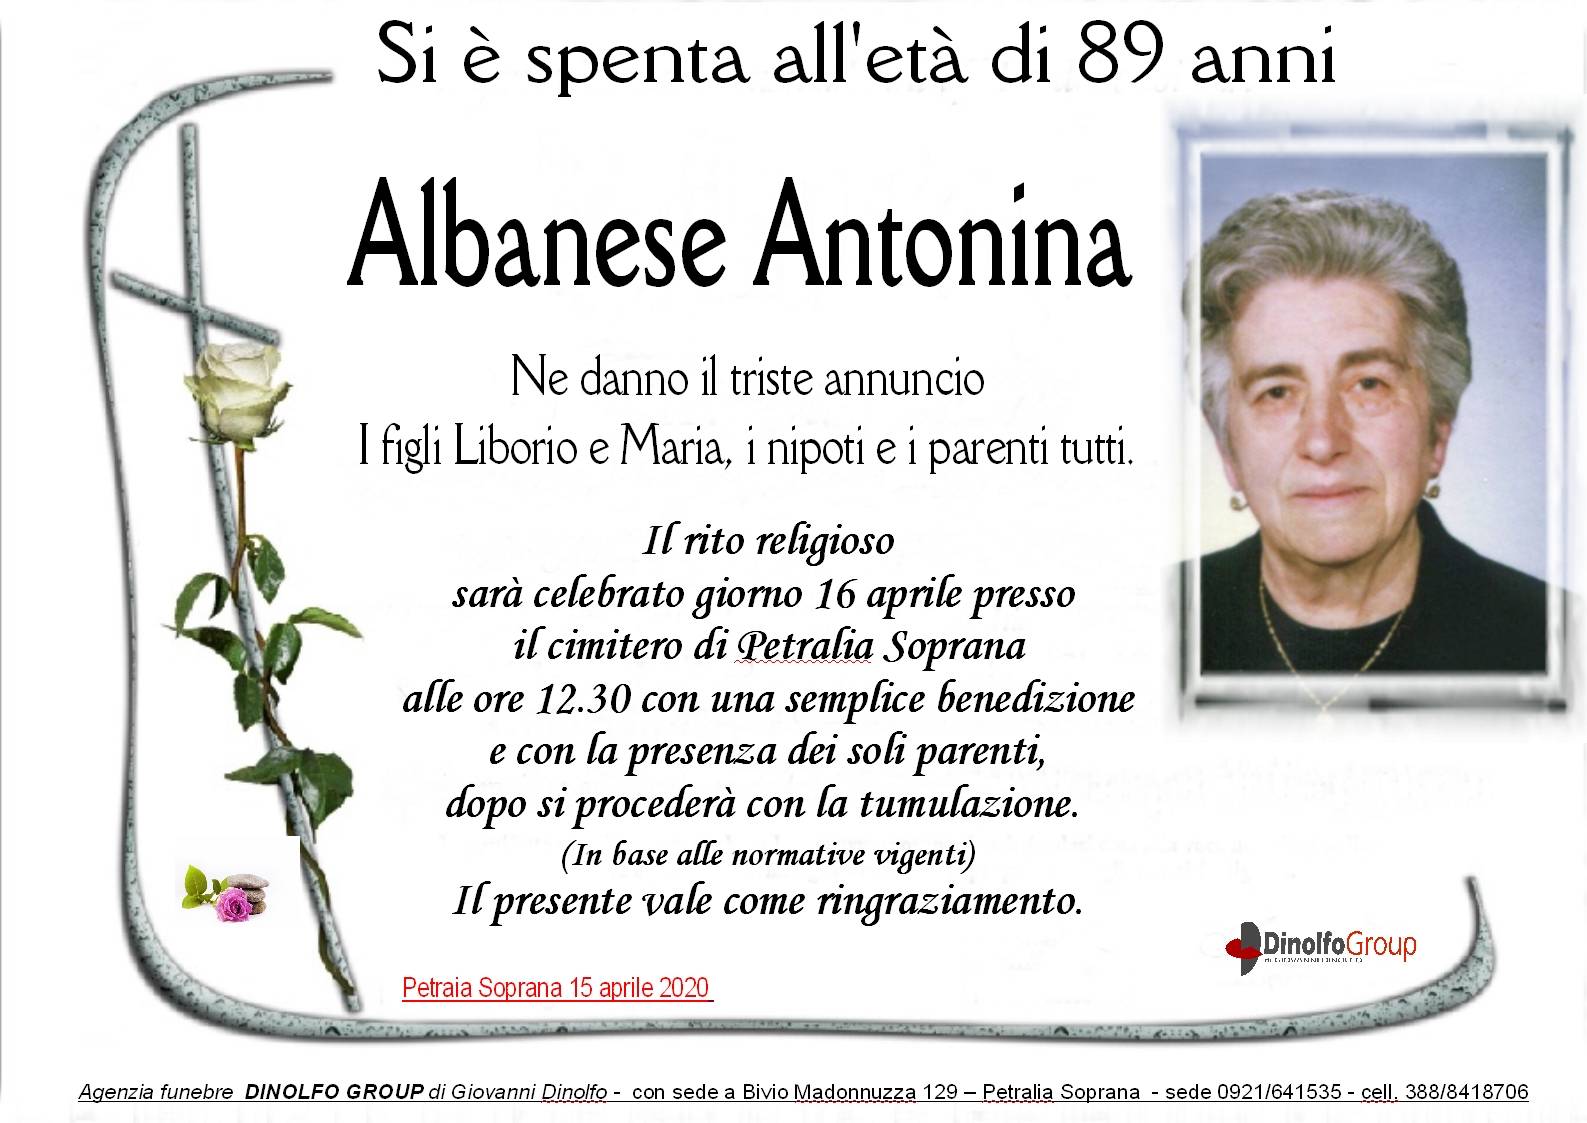 Antonina Albanese